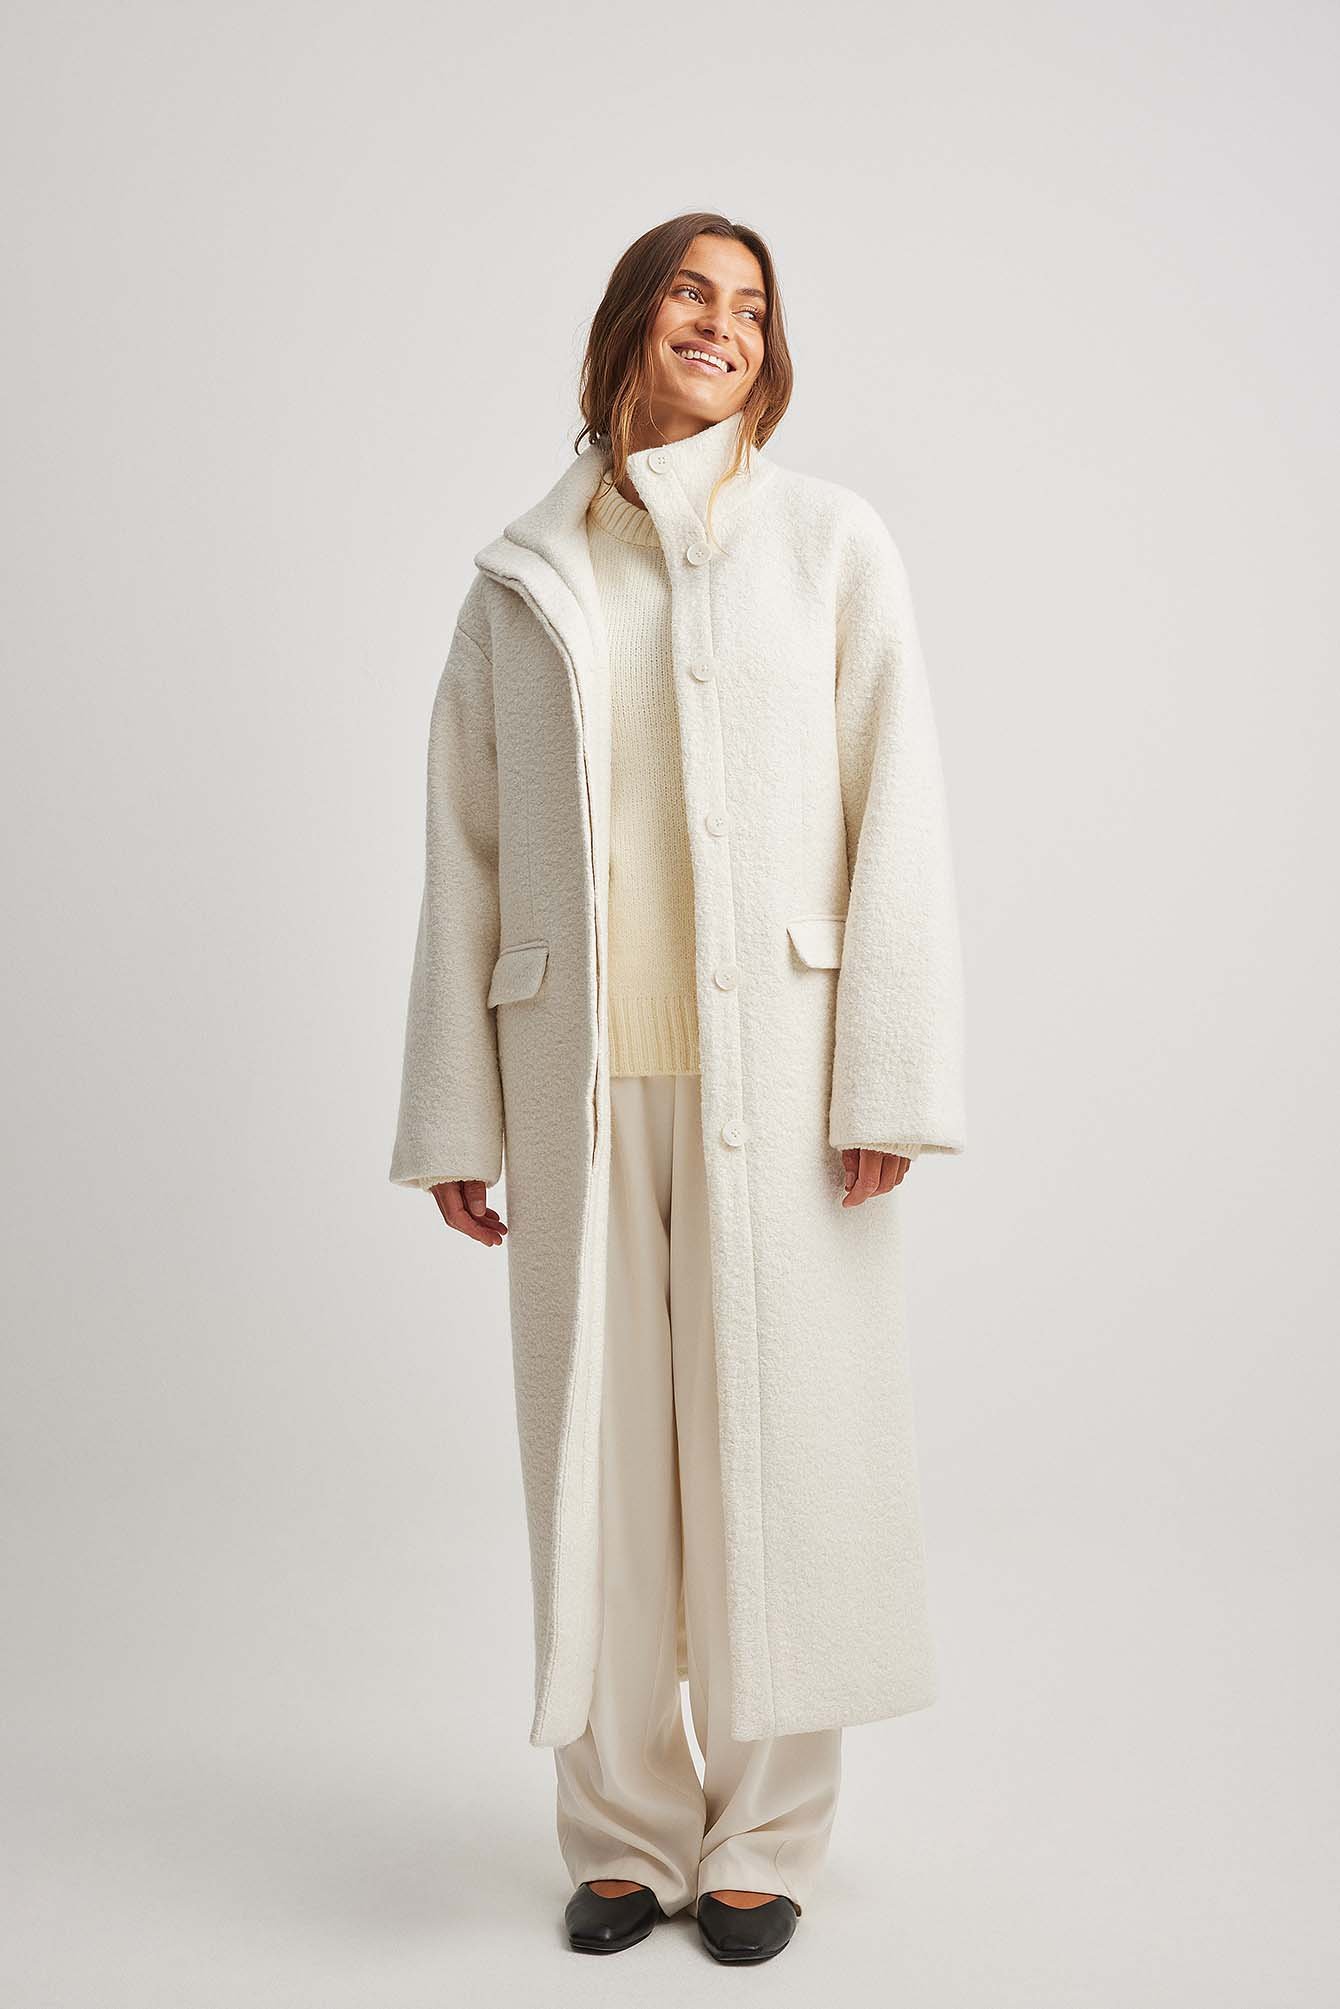 anna maria damm x na-kd wool blend structured coat - offwhite